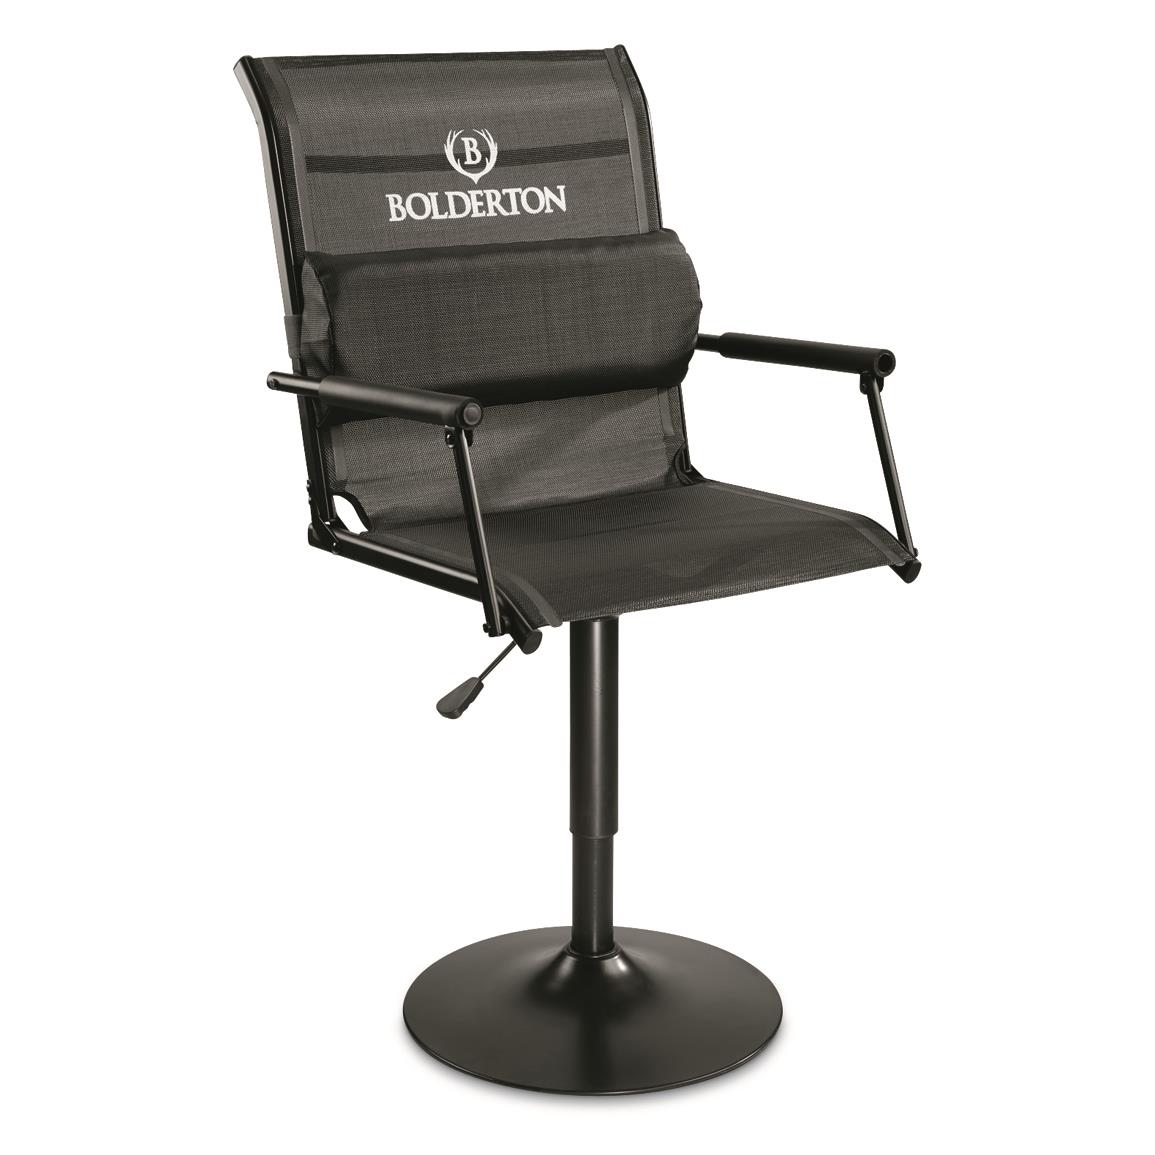 Bolderton XL Swivel Tower Blind Chair